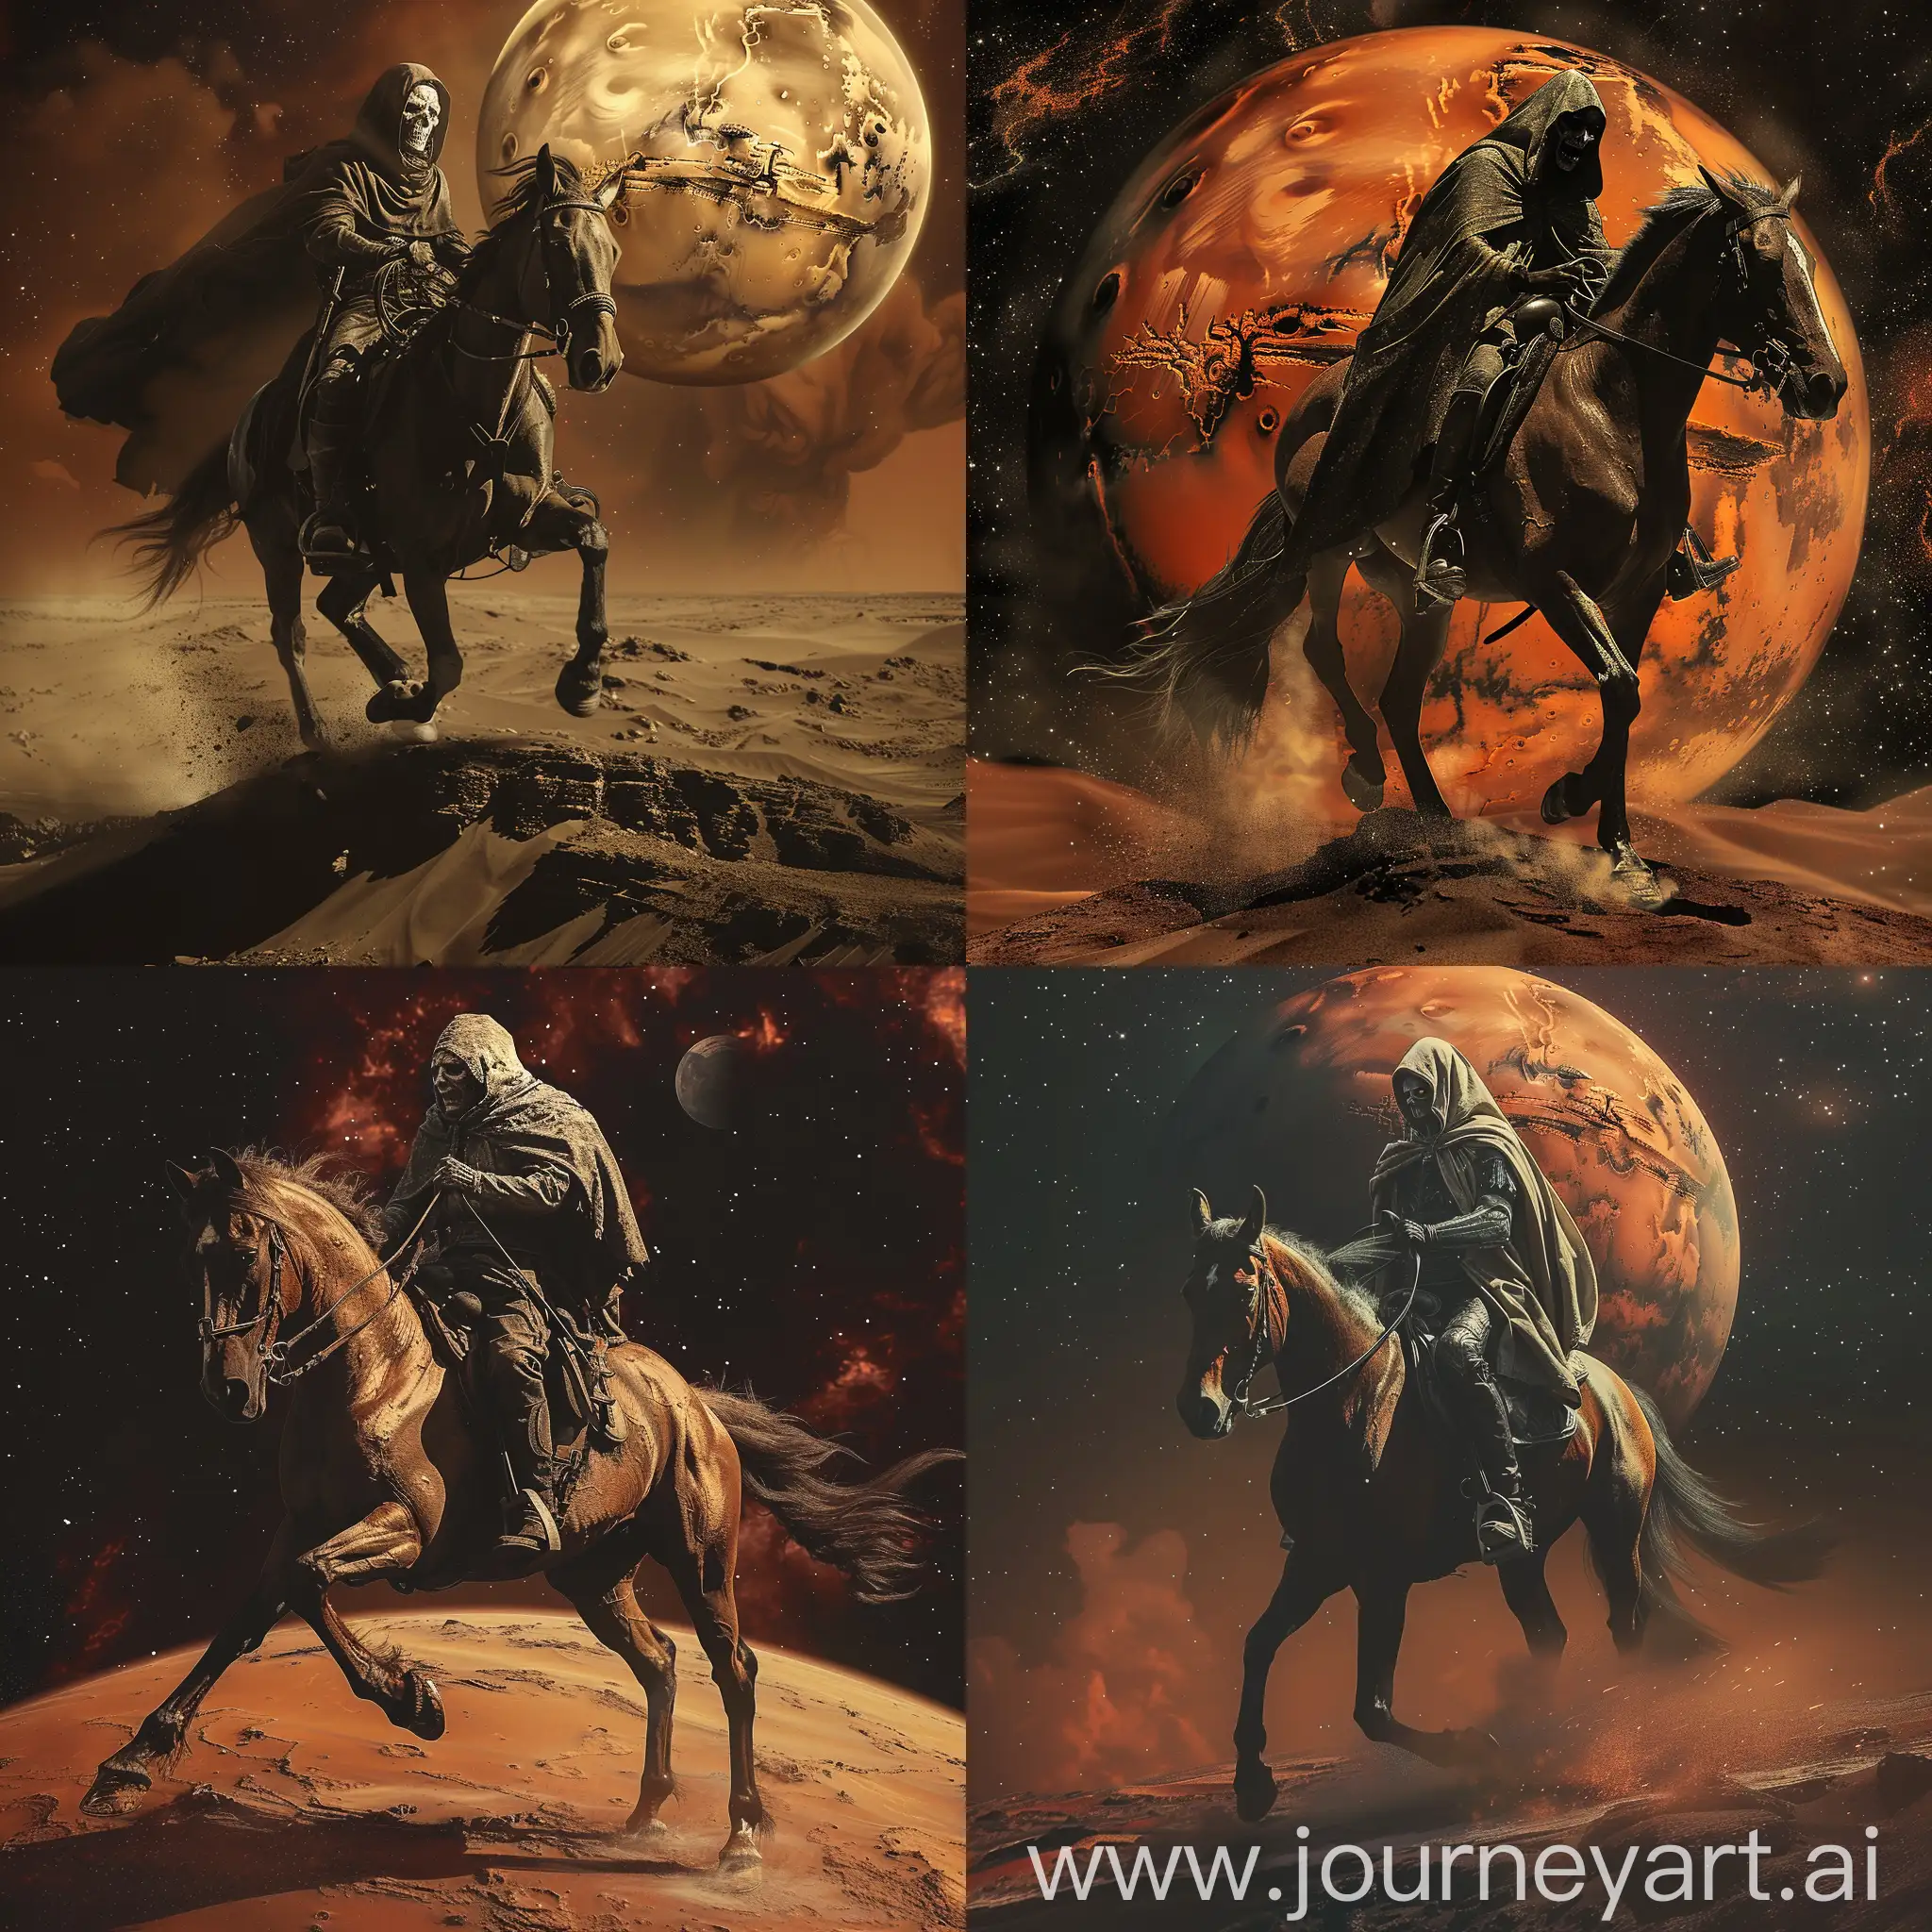 Gothic-Style-Headless-Horseman-on-Horseback-on-Mars